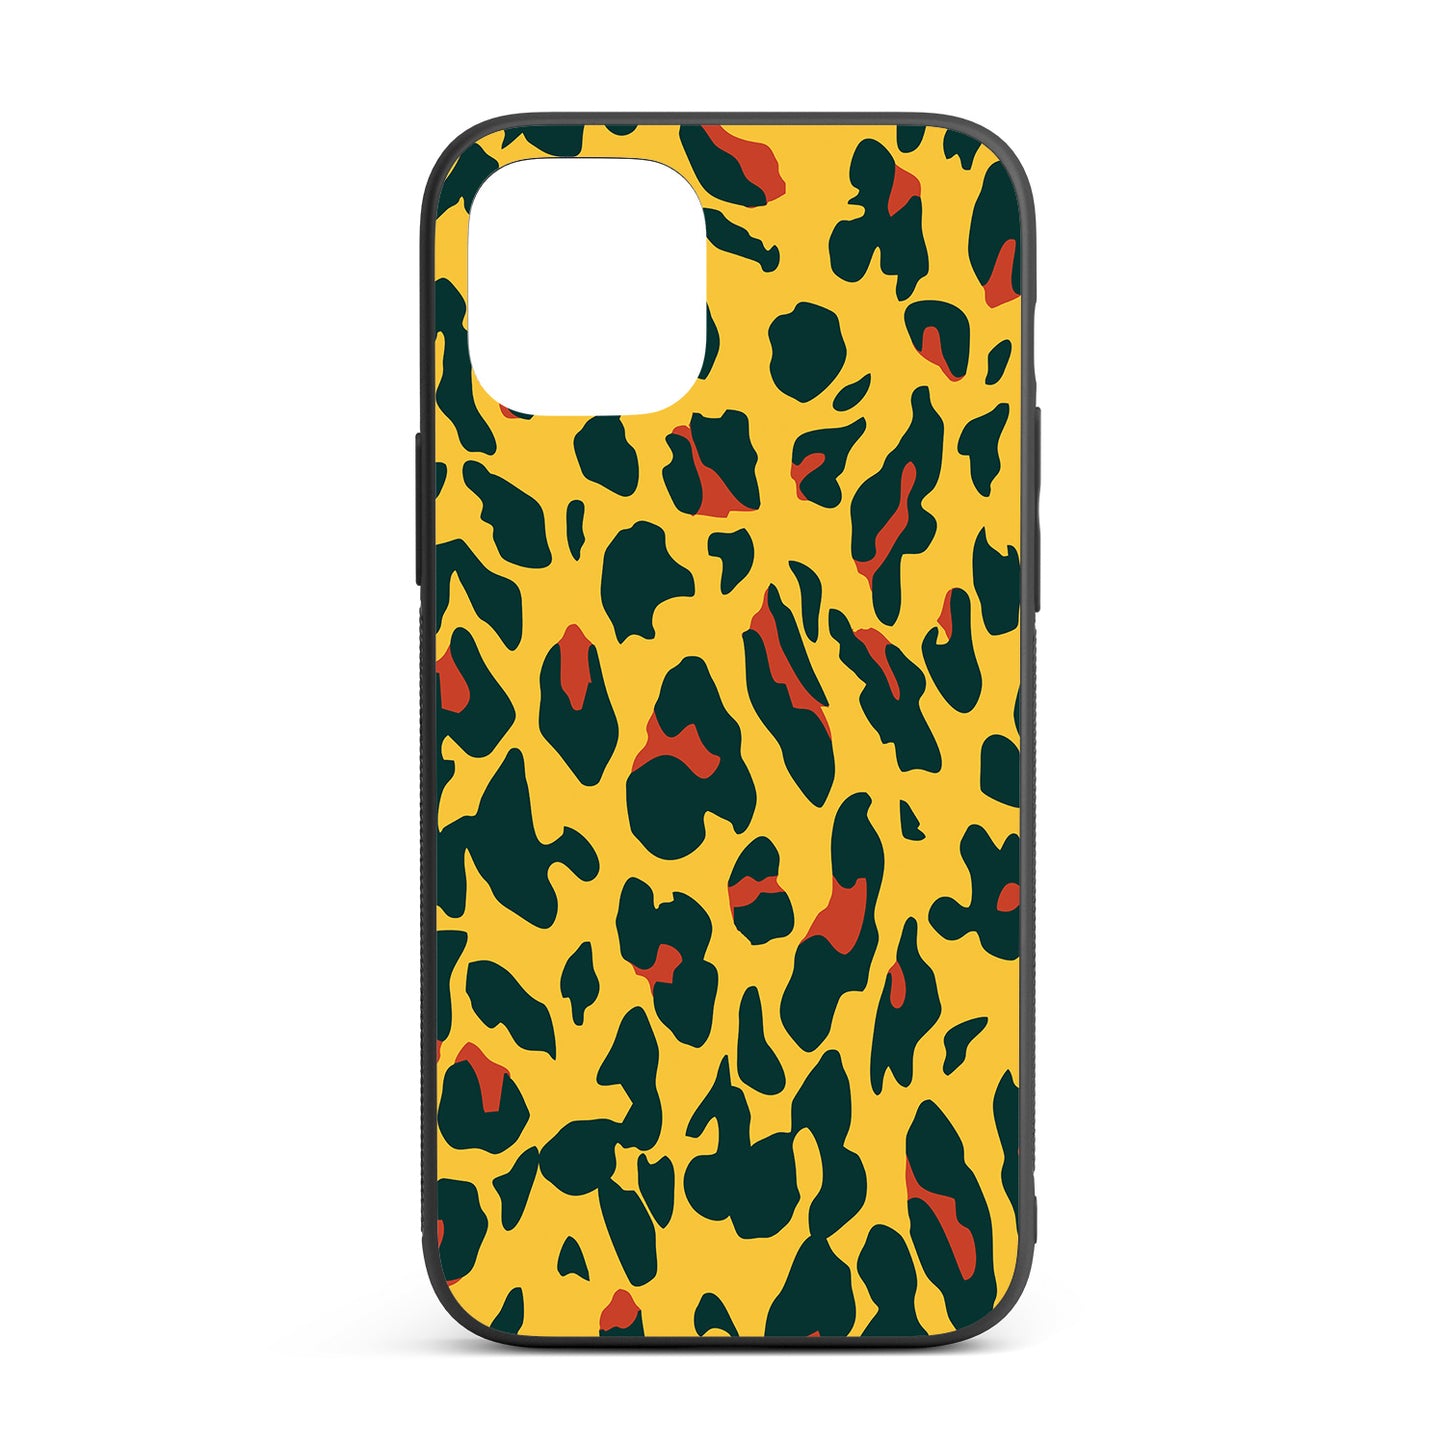 Leopard pattern iPhone glass case